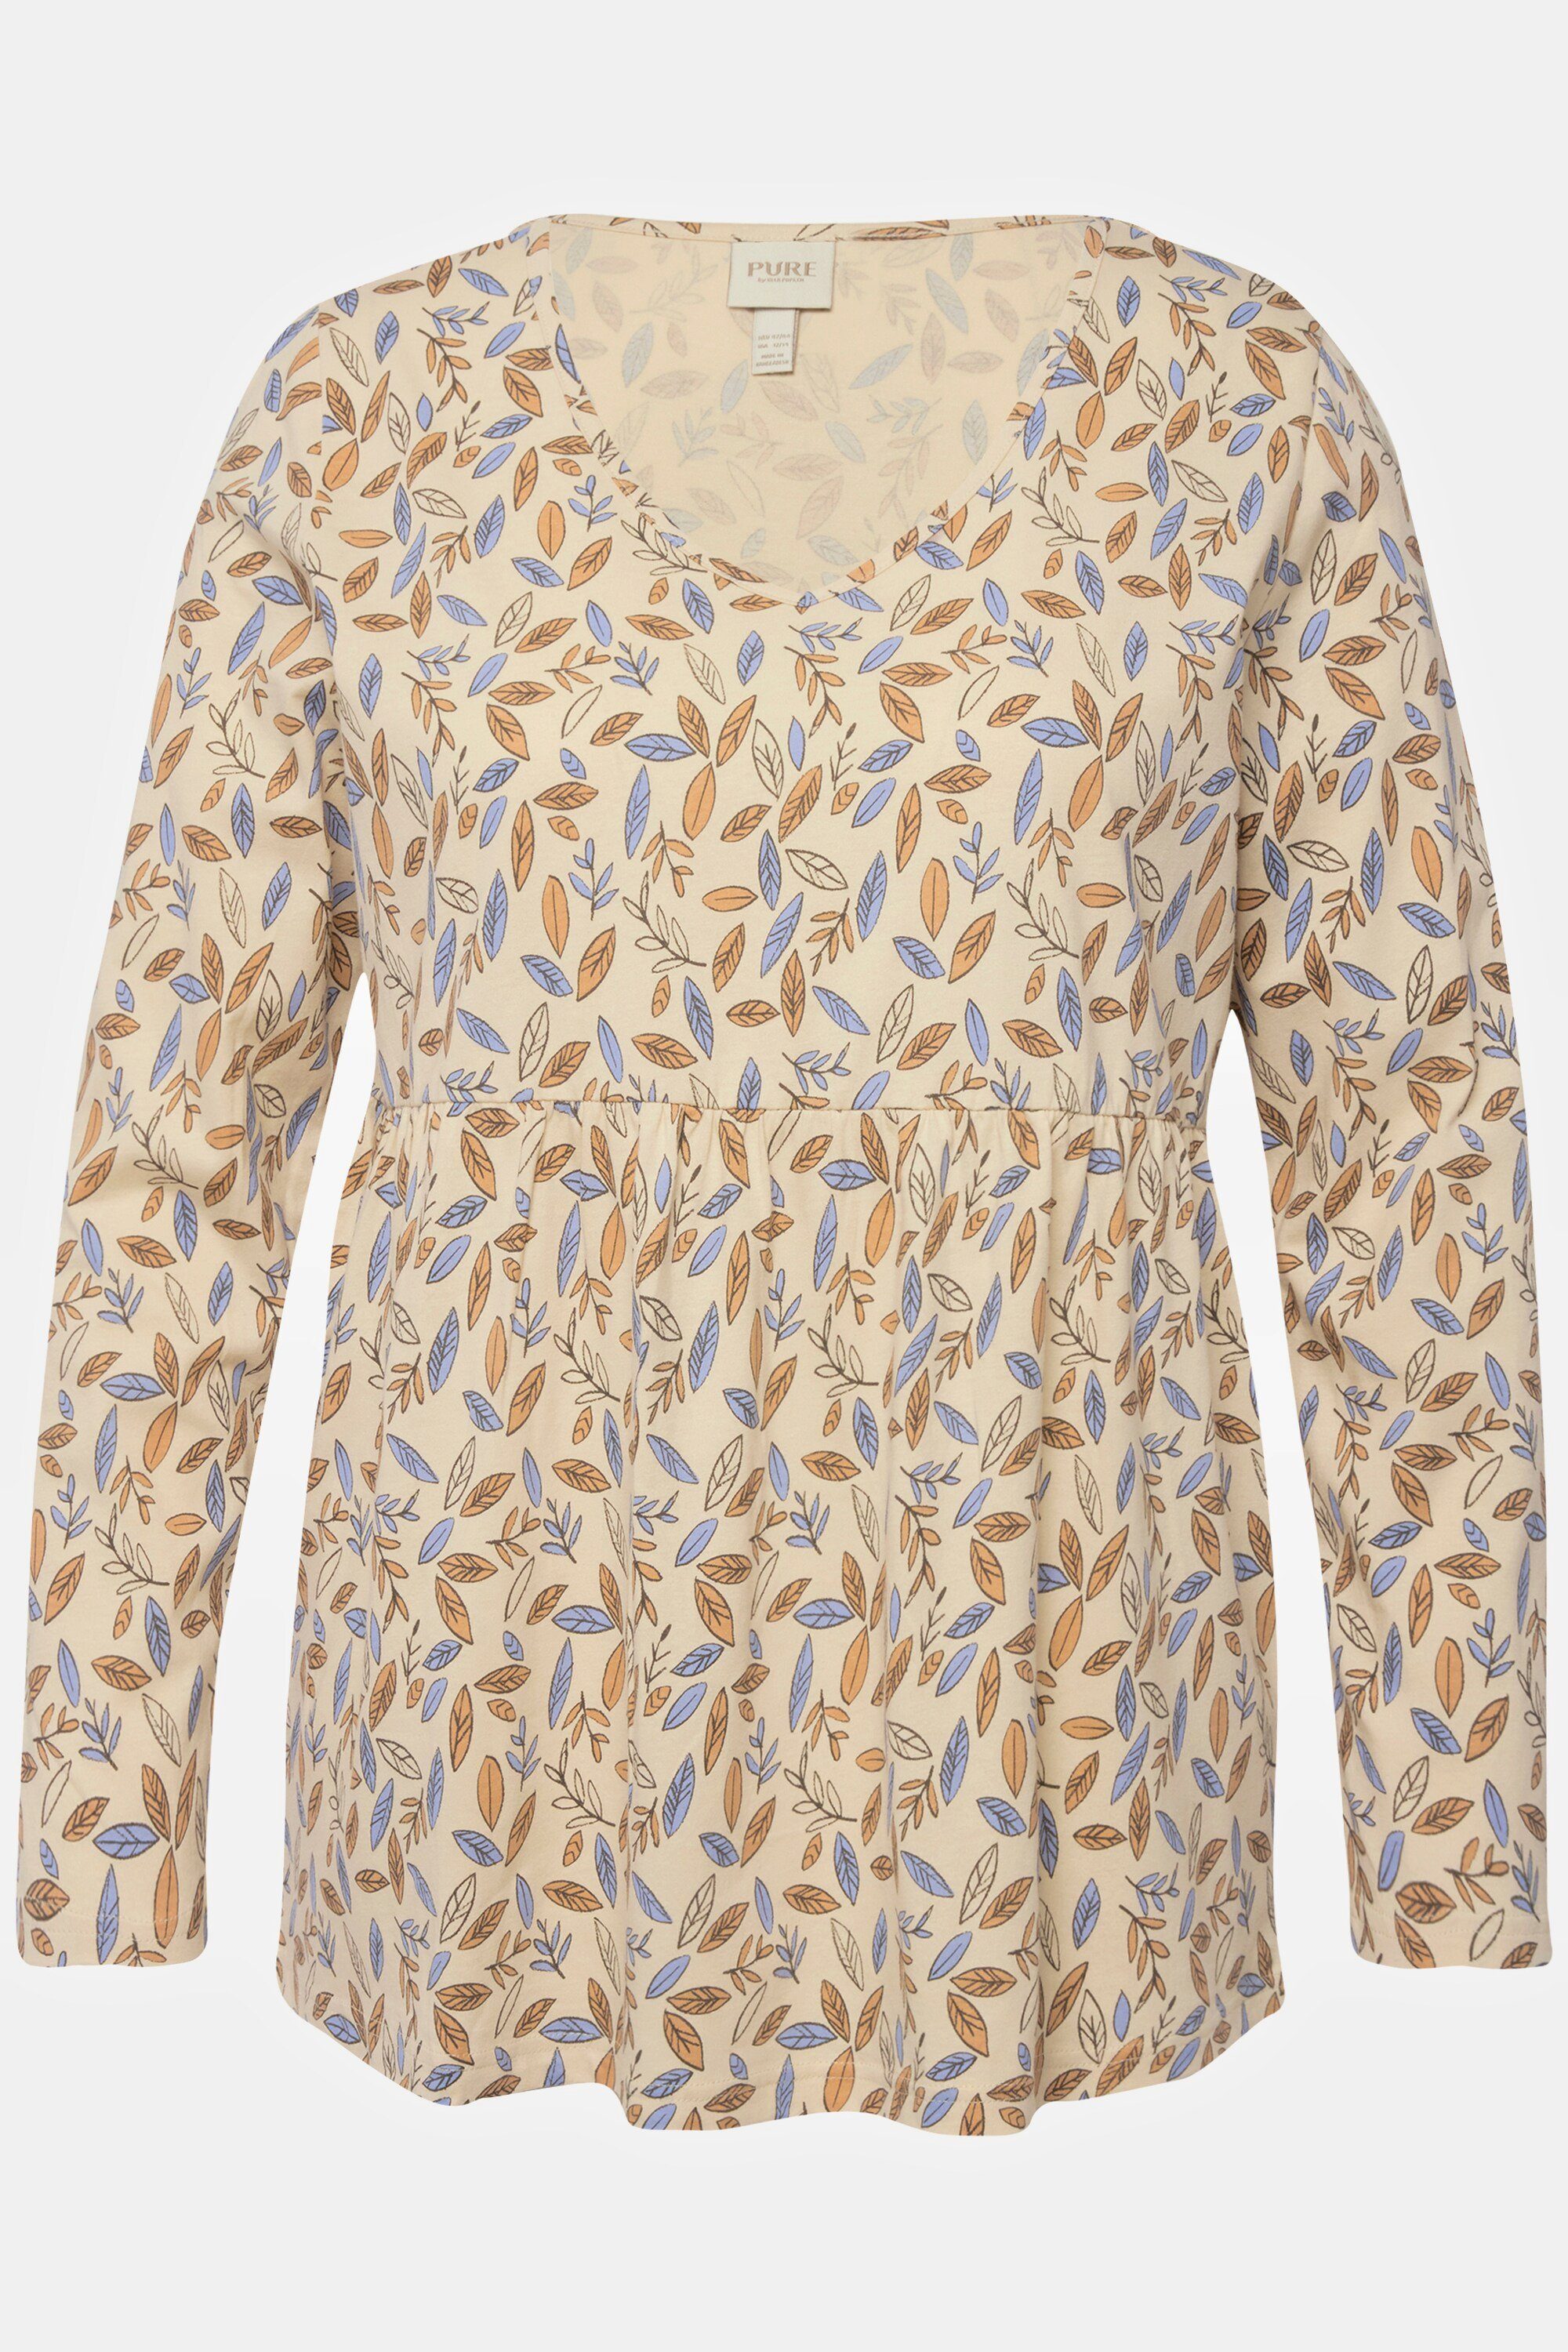 Blätter beige Schlafshirt Ulla V-Ausschnitt Popken Pyjama Langarm